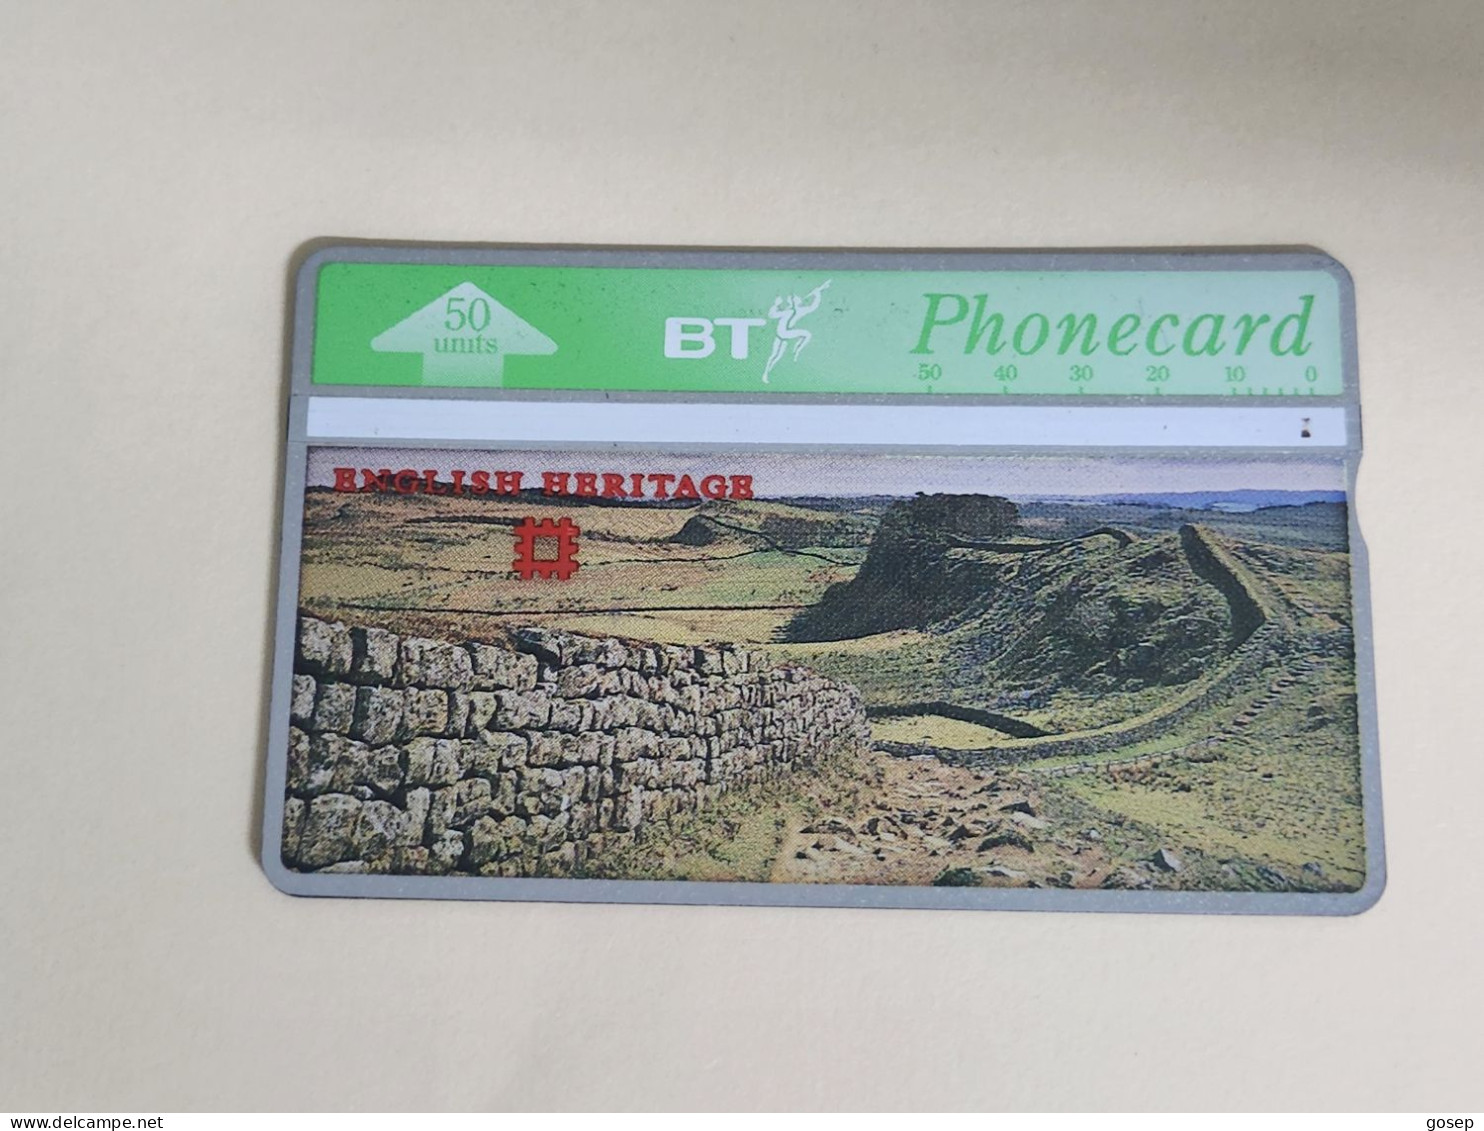 United Kingdom-(BTA107)-HERITAGE-Hadrian's Wall-(181)(50units)(528E62834)price Cataloge3.00£-used+1card Prepiad Free - BT Werbezwecke